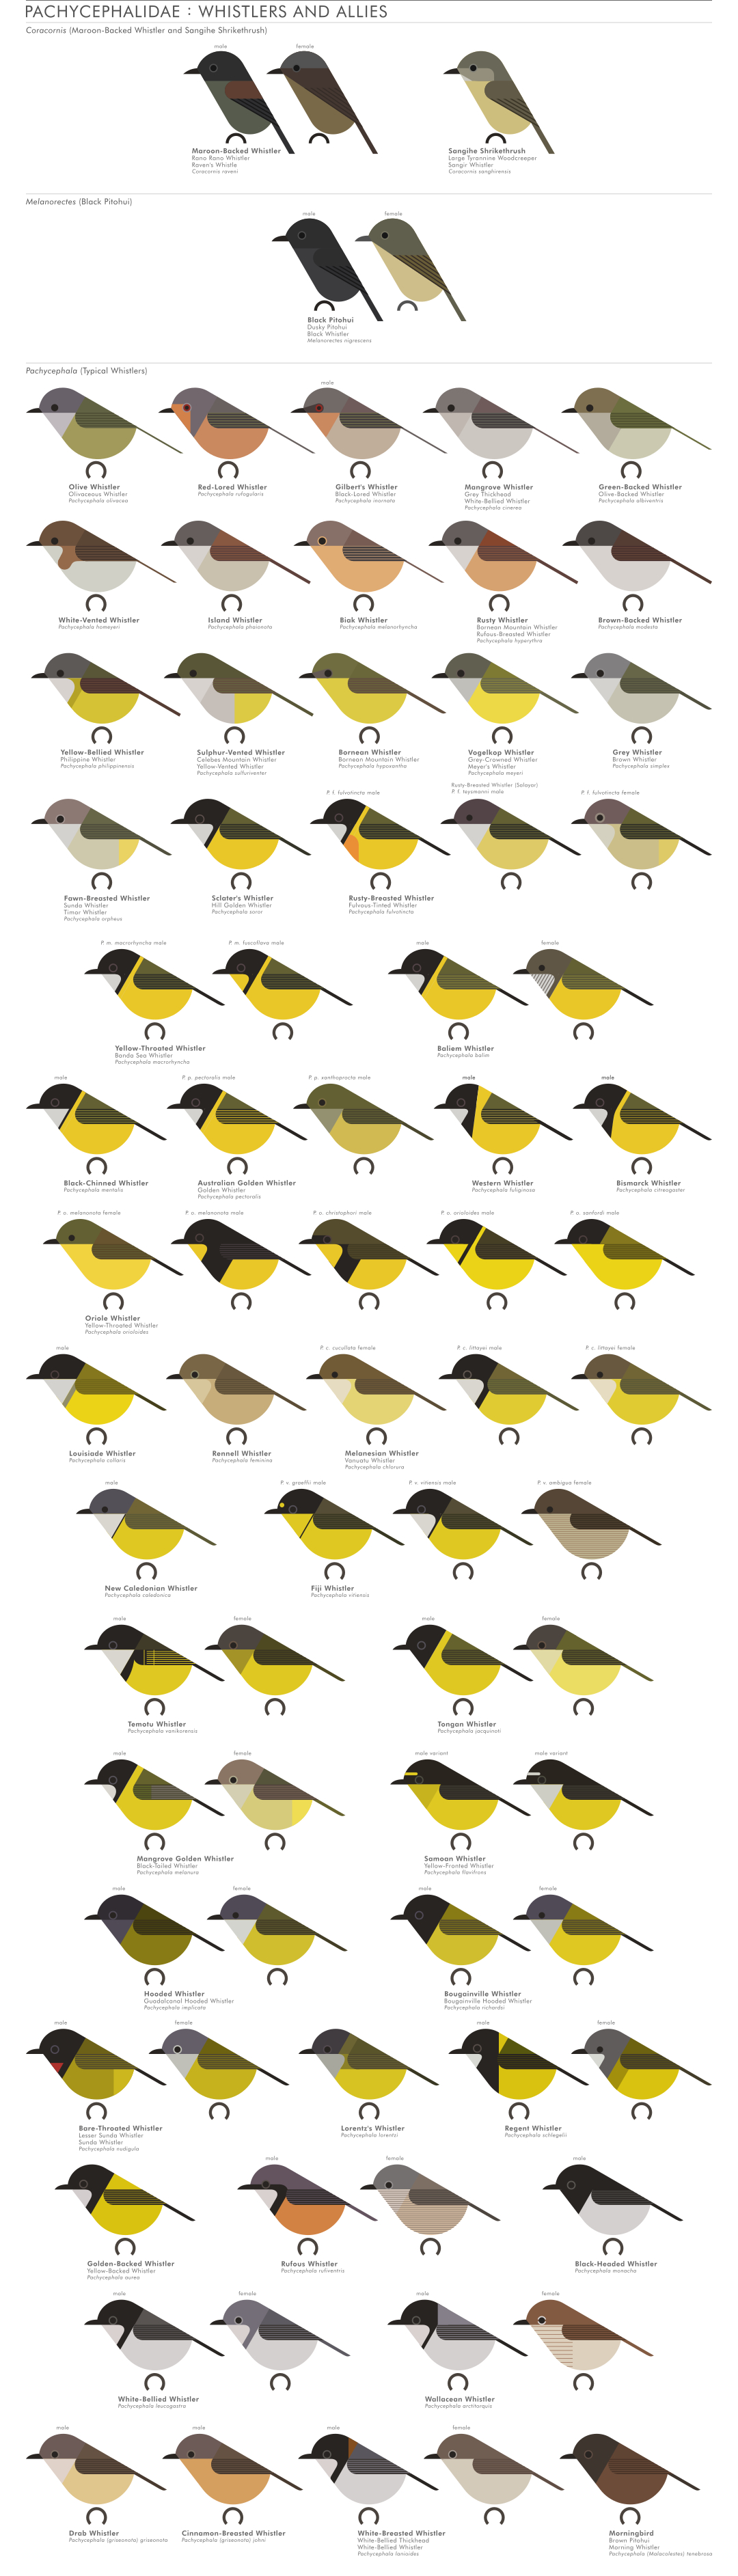 scott partridge - AVE - avian vector encyclopedia - whistlers - bird vector art